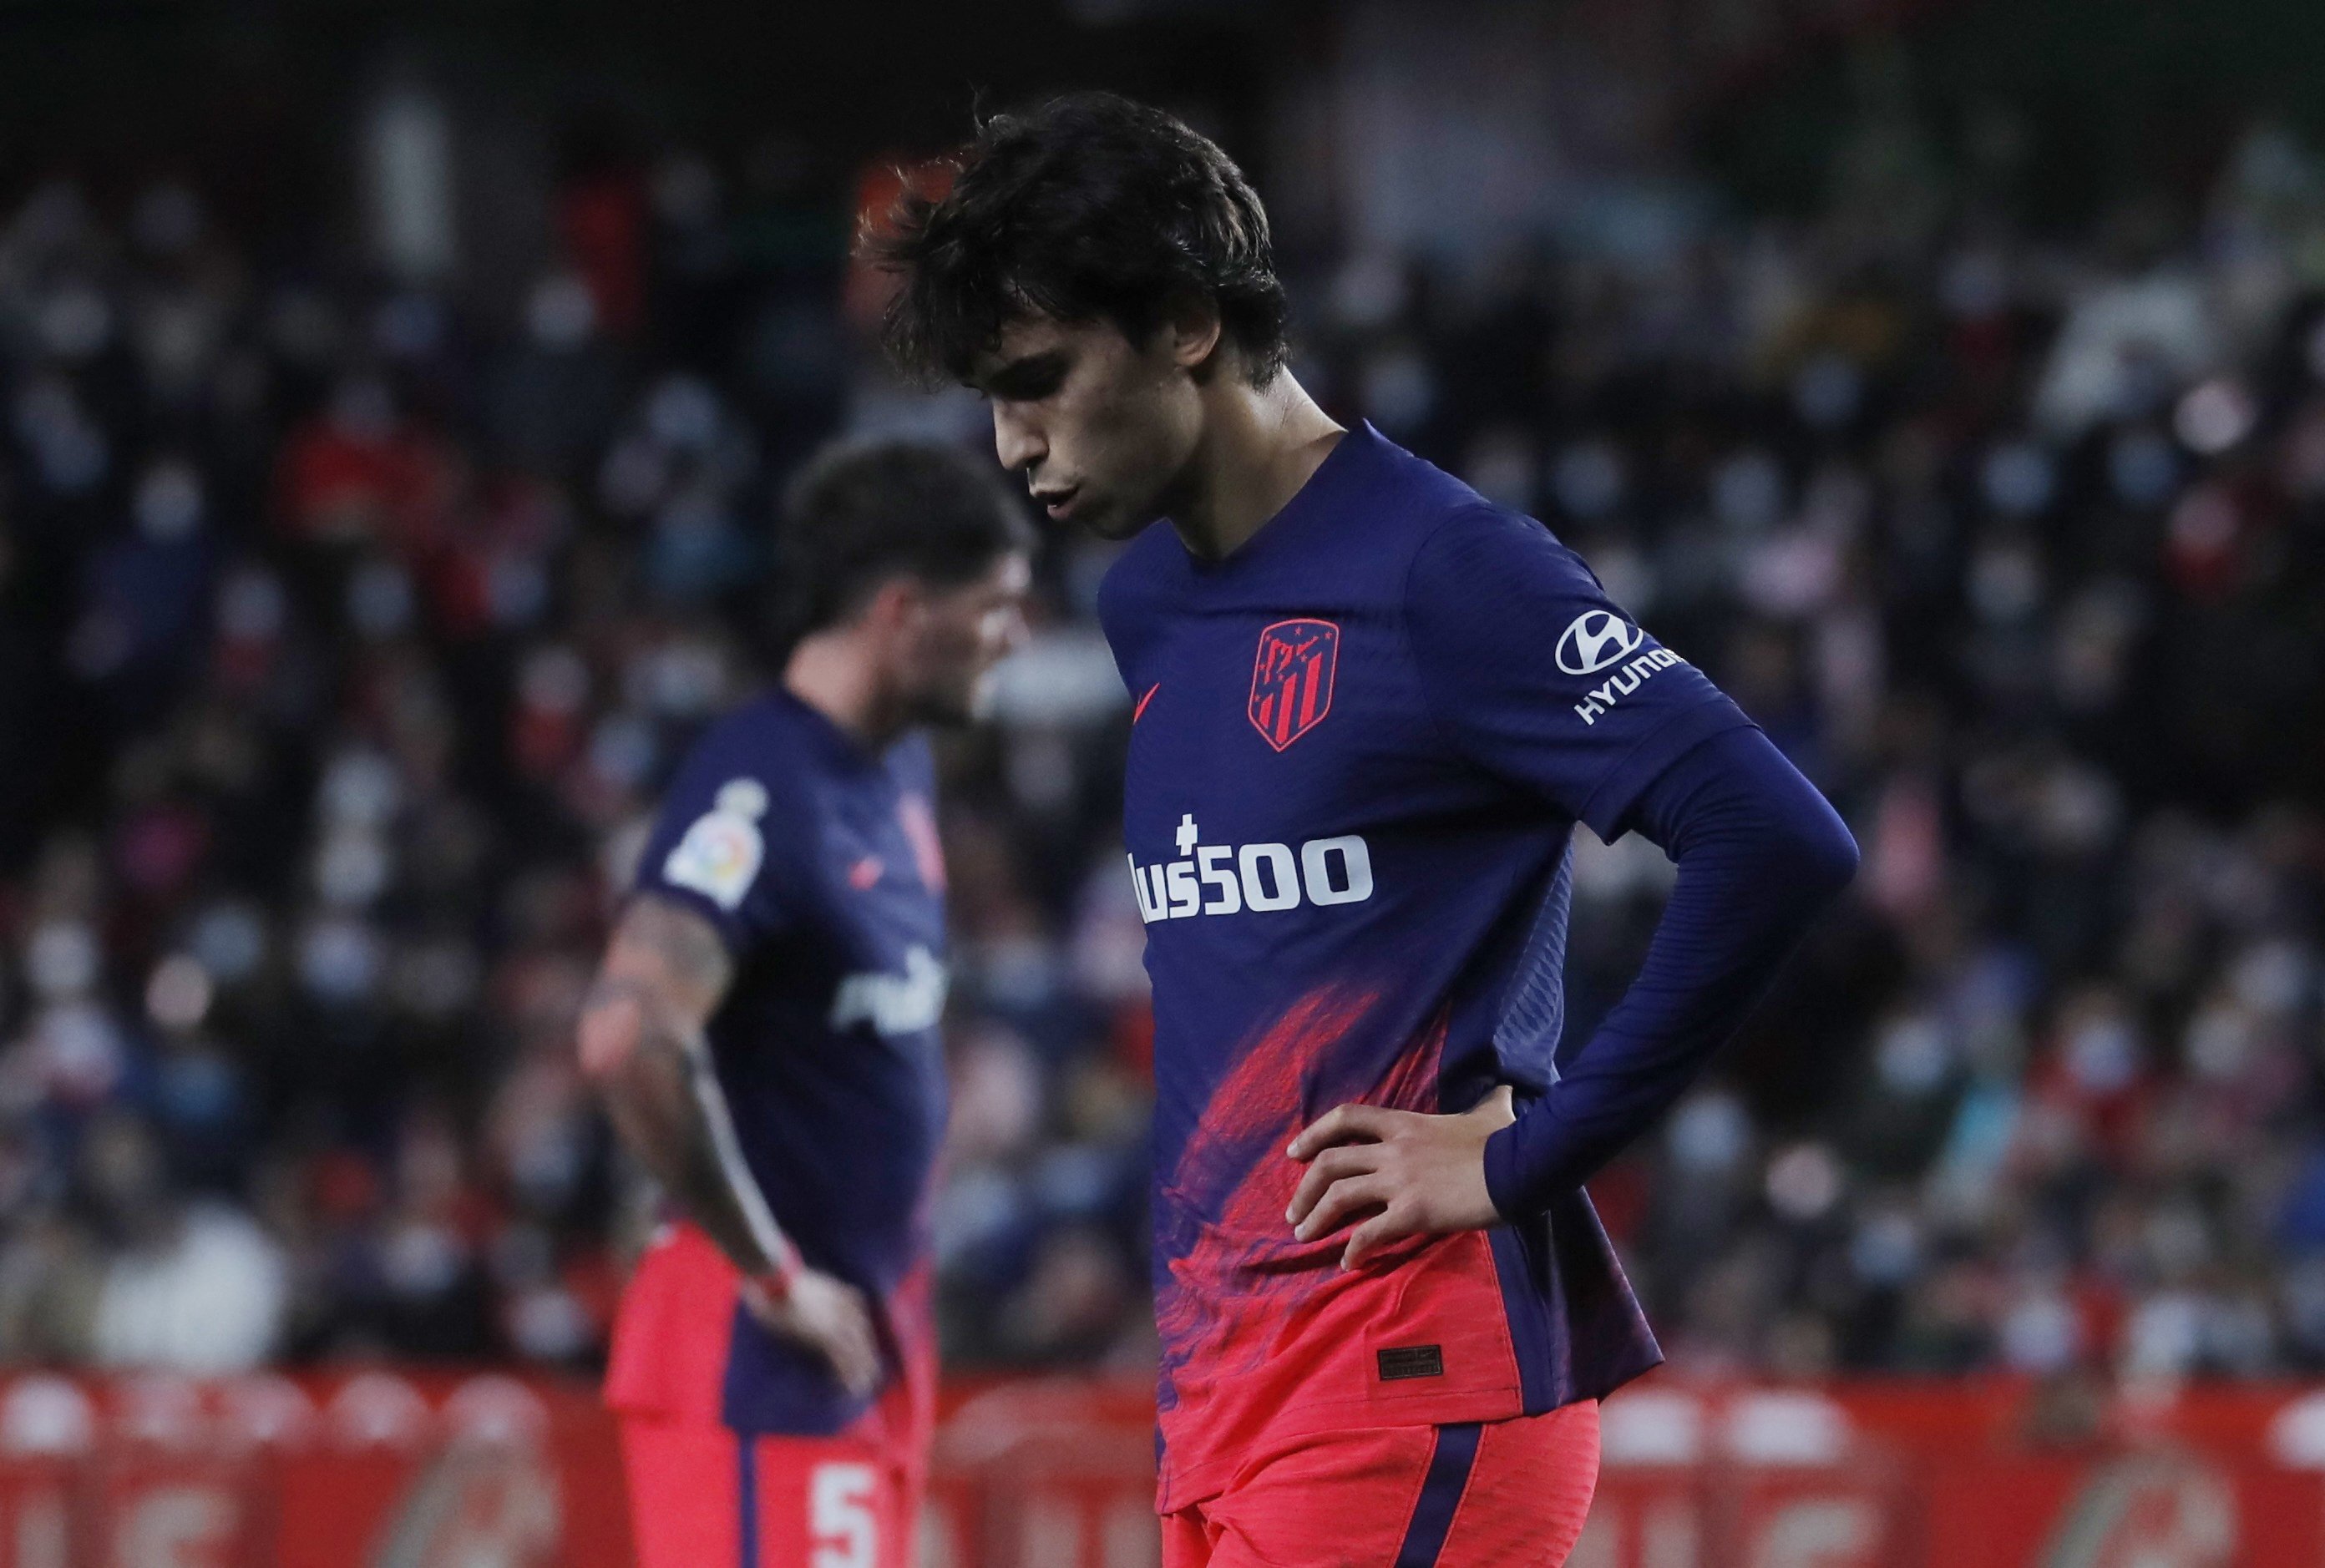 Atletico Madrid's Joao Felix looks dejected after a disallowed goal during a La Liga match against Granada at Nuevo Estadio de Los Carmenes, Granada, Spain, Dec. 22, 2021.